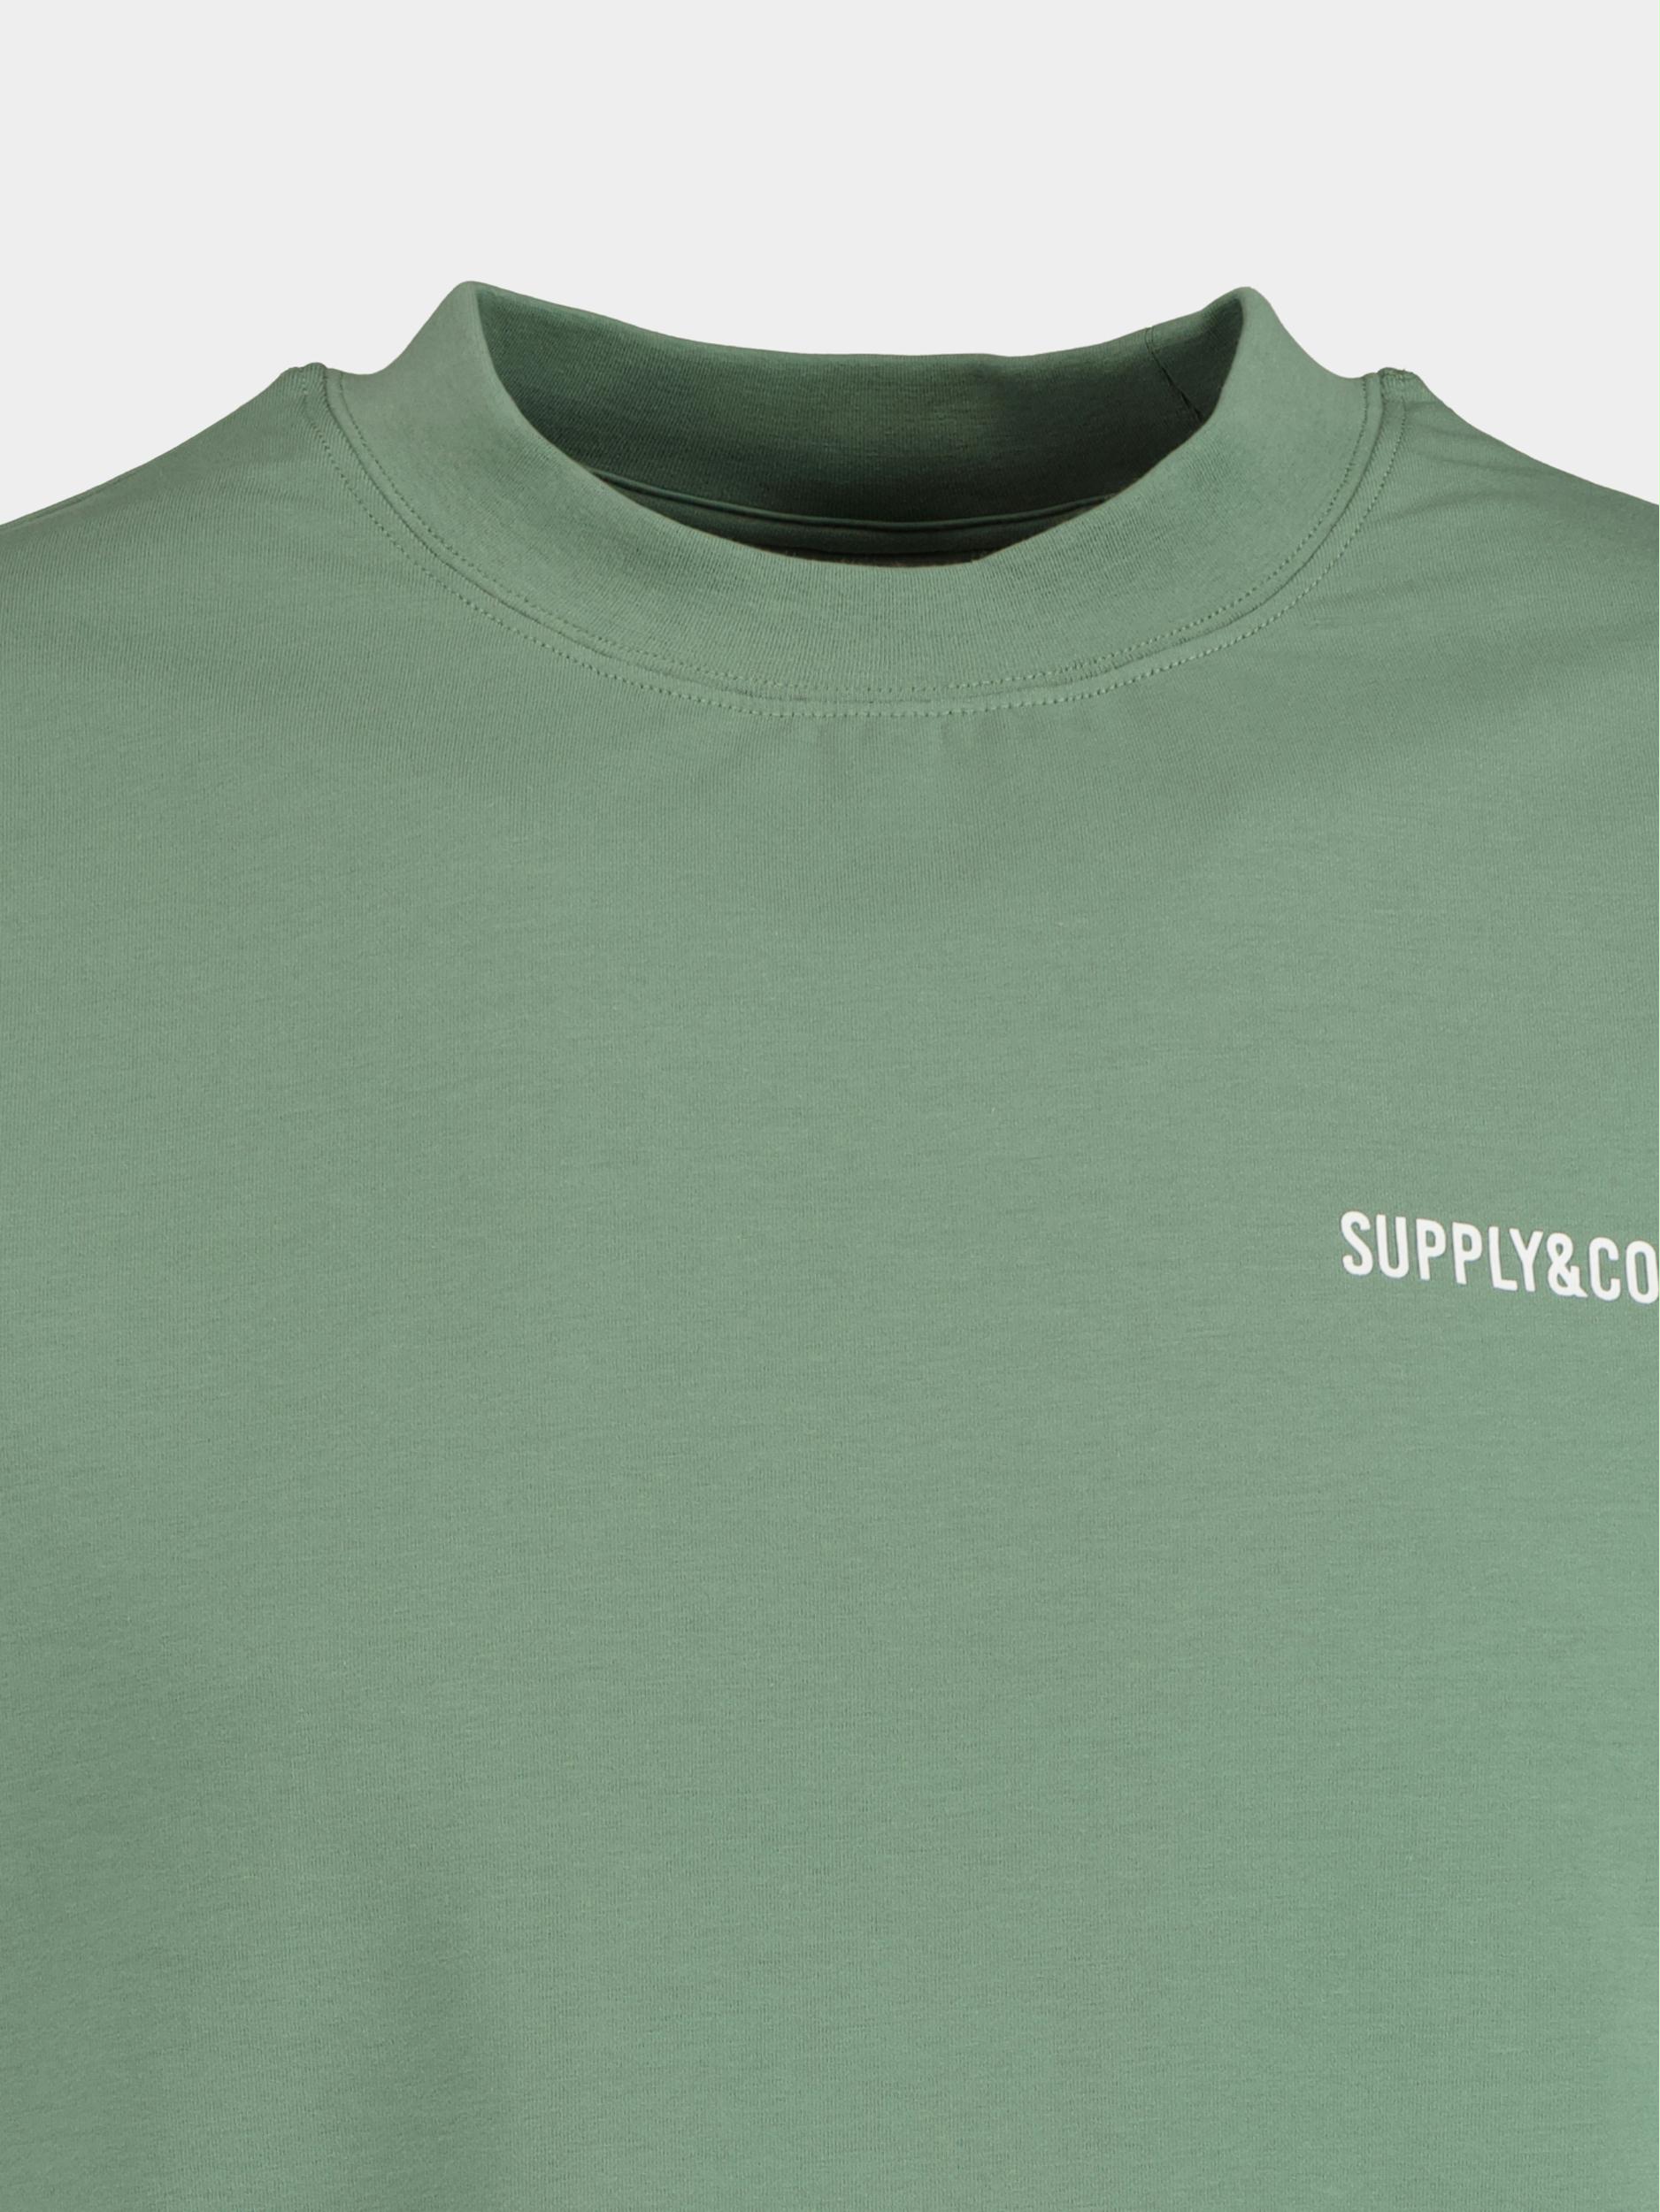 Supply & Co. T-shirt korte mouw Groen Basic Tee Chest Logo 22108BA51/903 dusty green